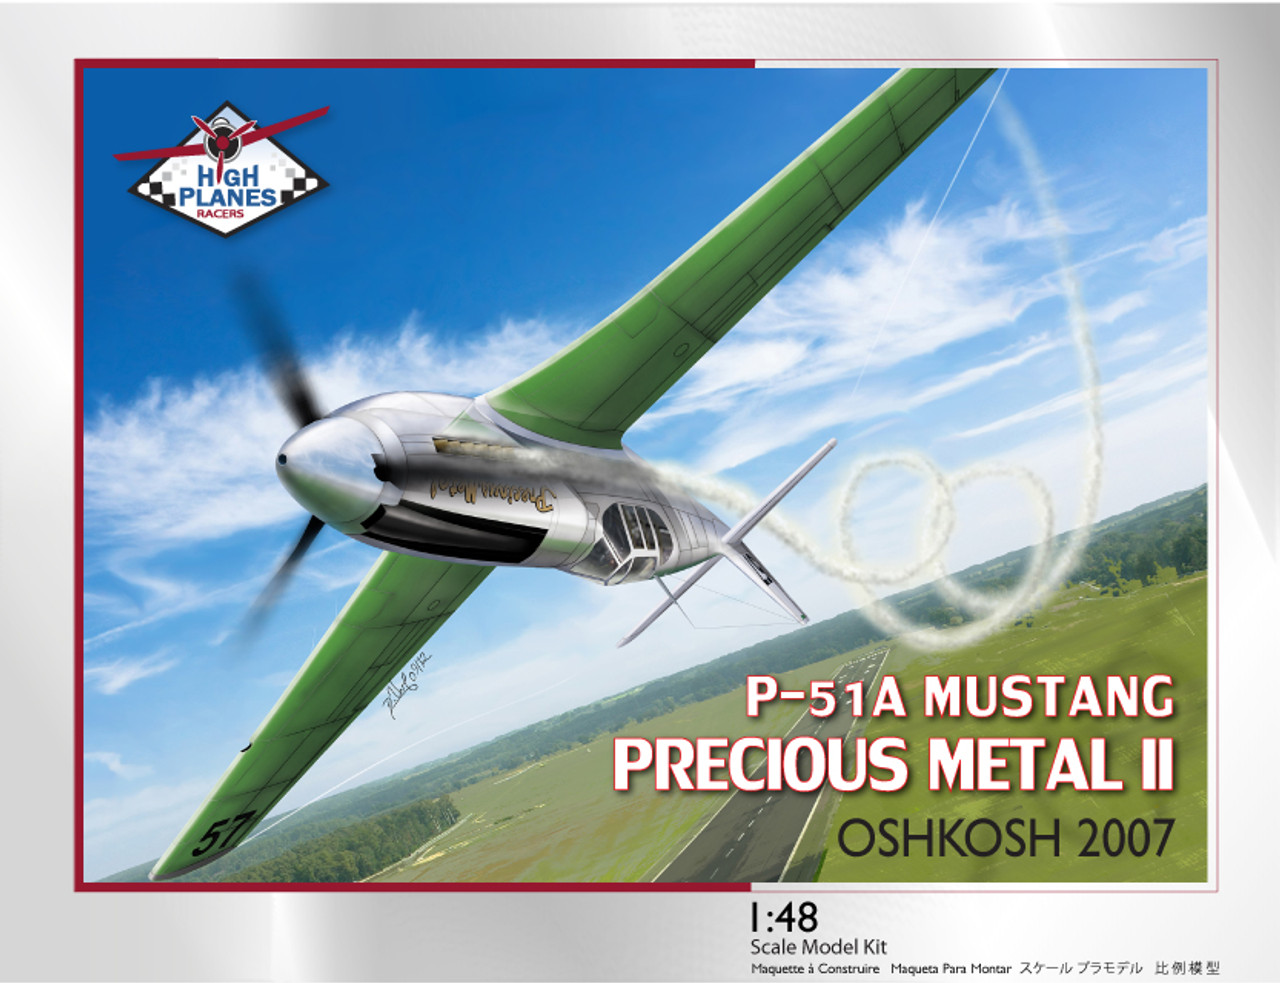 High Planes P-51A Mustang "Precious Metal II" Racer Kit 1:48